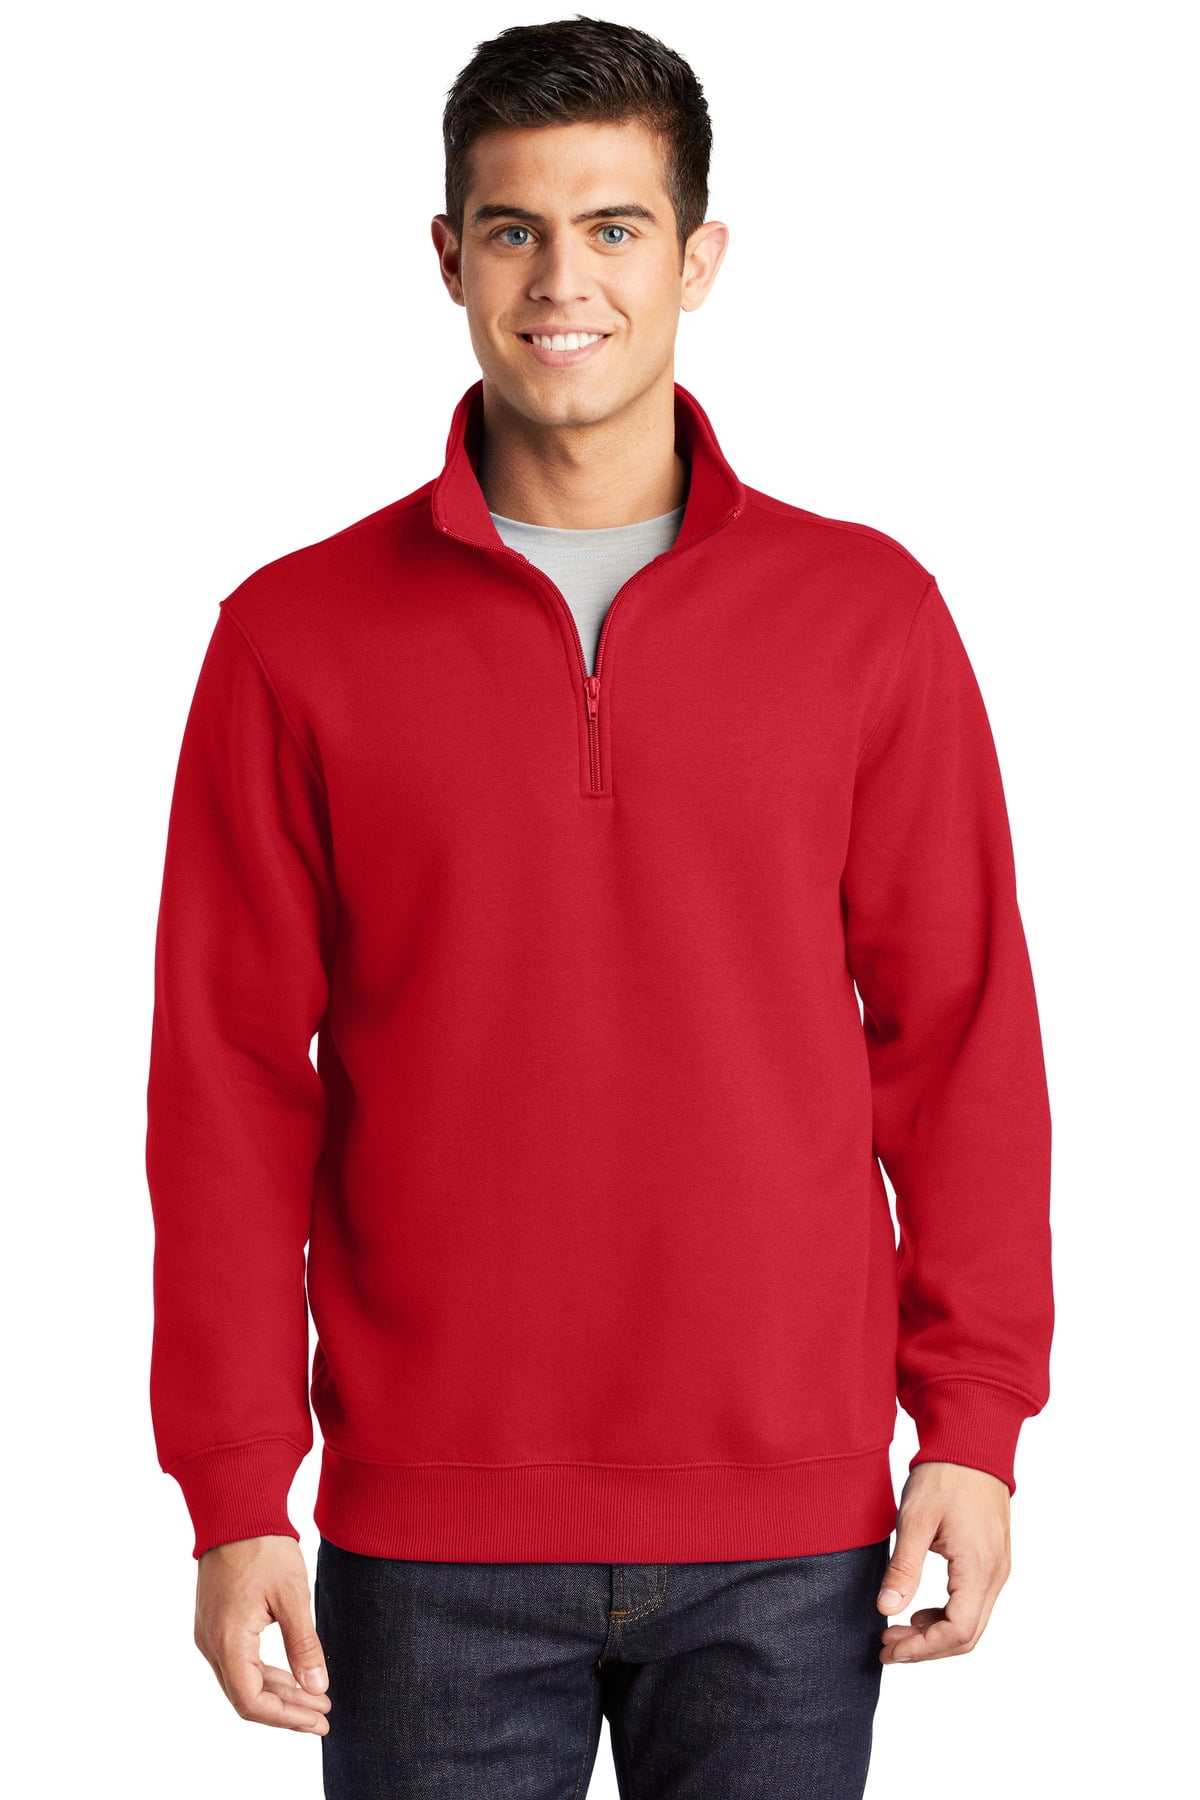 Sport-Tek Tall 1/4 Zip Sweatshirt-XLT (True Red) - Walmart.com